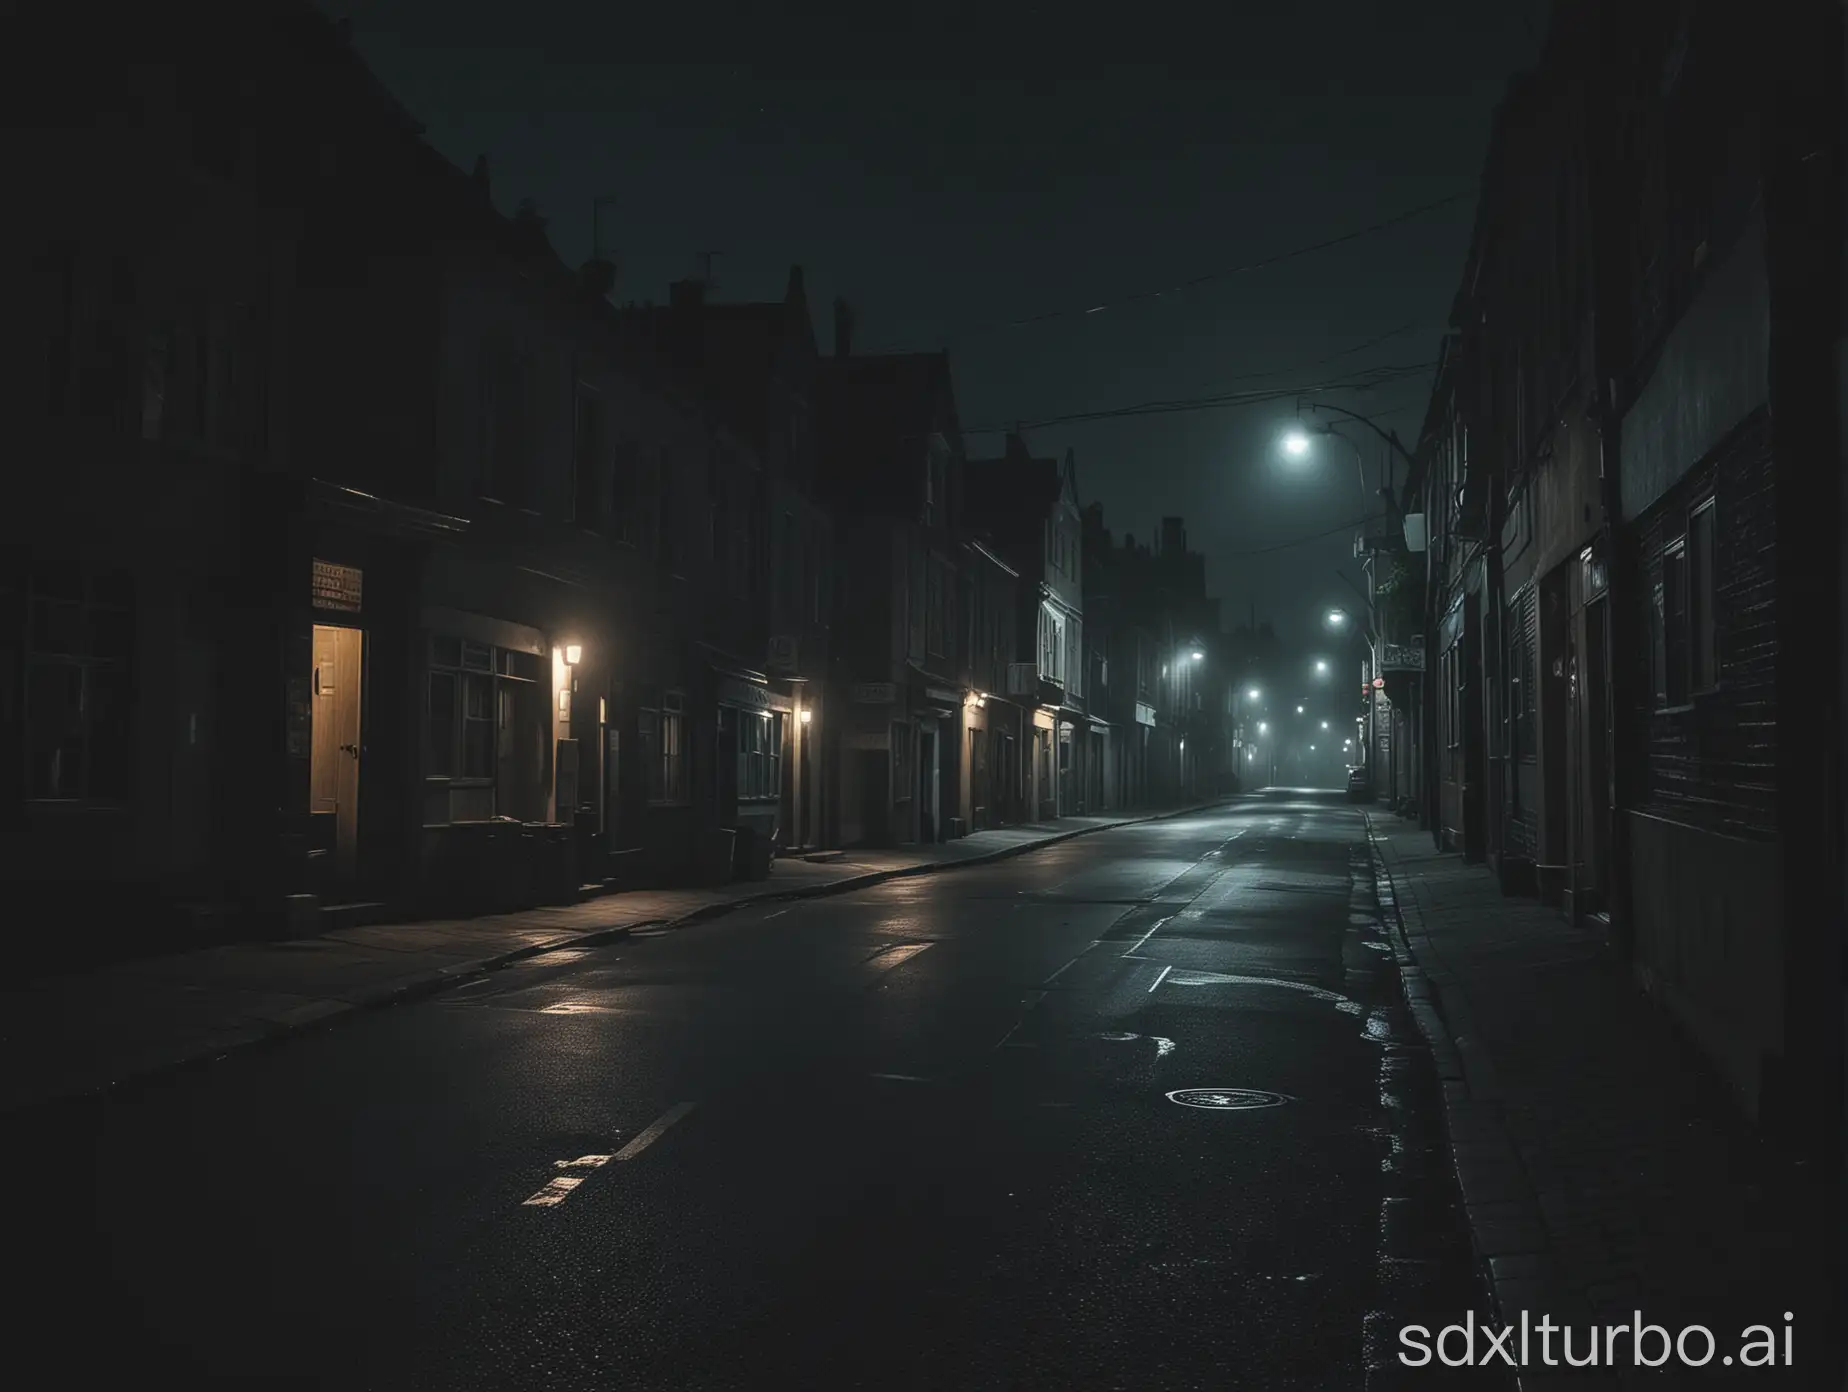 Cinematic-Street-Scene-with-Dark-Ambiance-in-Modest-Neighborhood